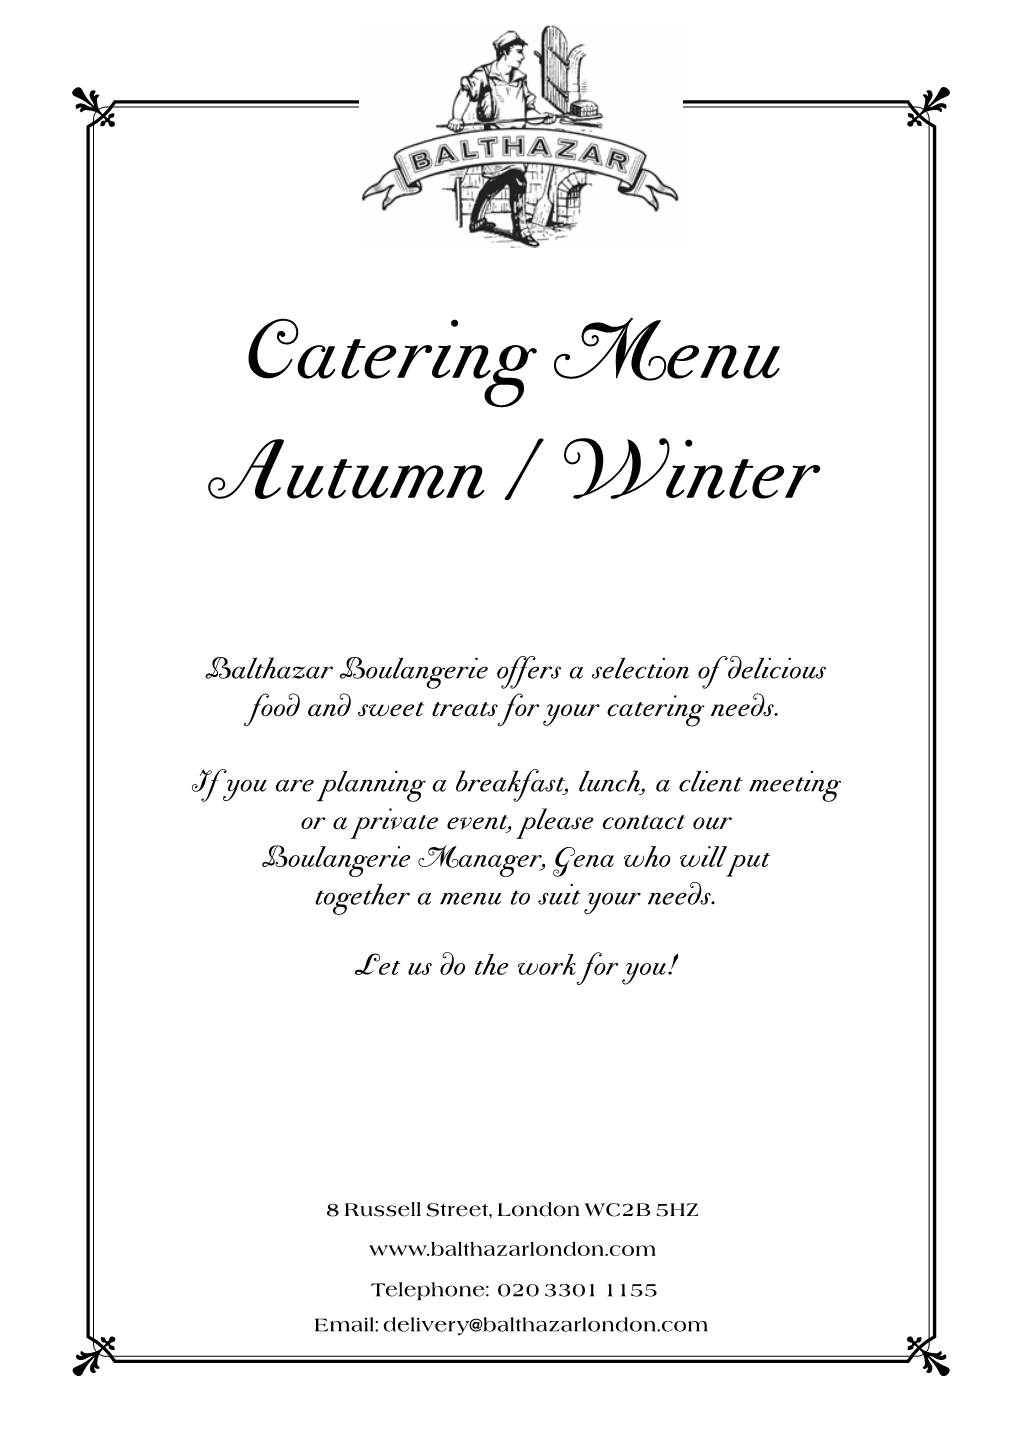 Catering Menu Autumn / Winter